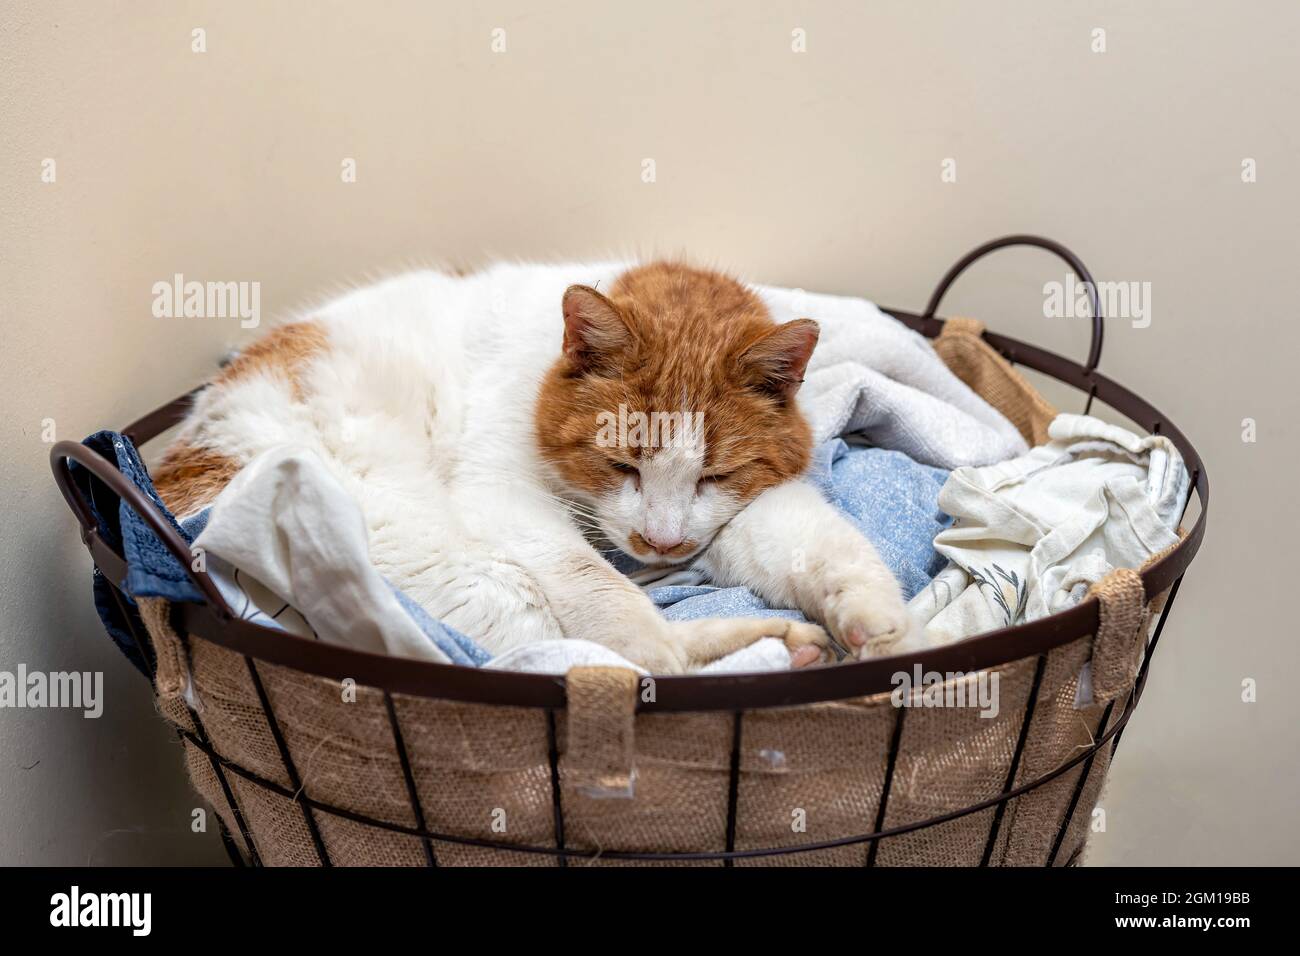 funny sleeping cat kitten in laundry basket Stock Photo - Alamy